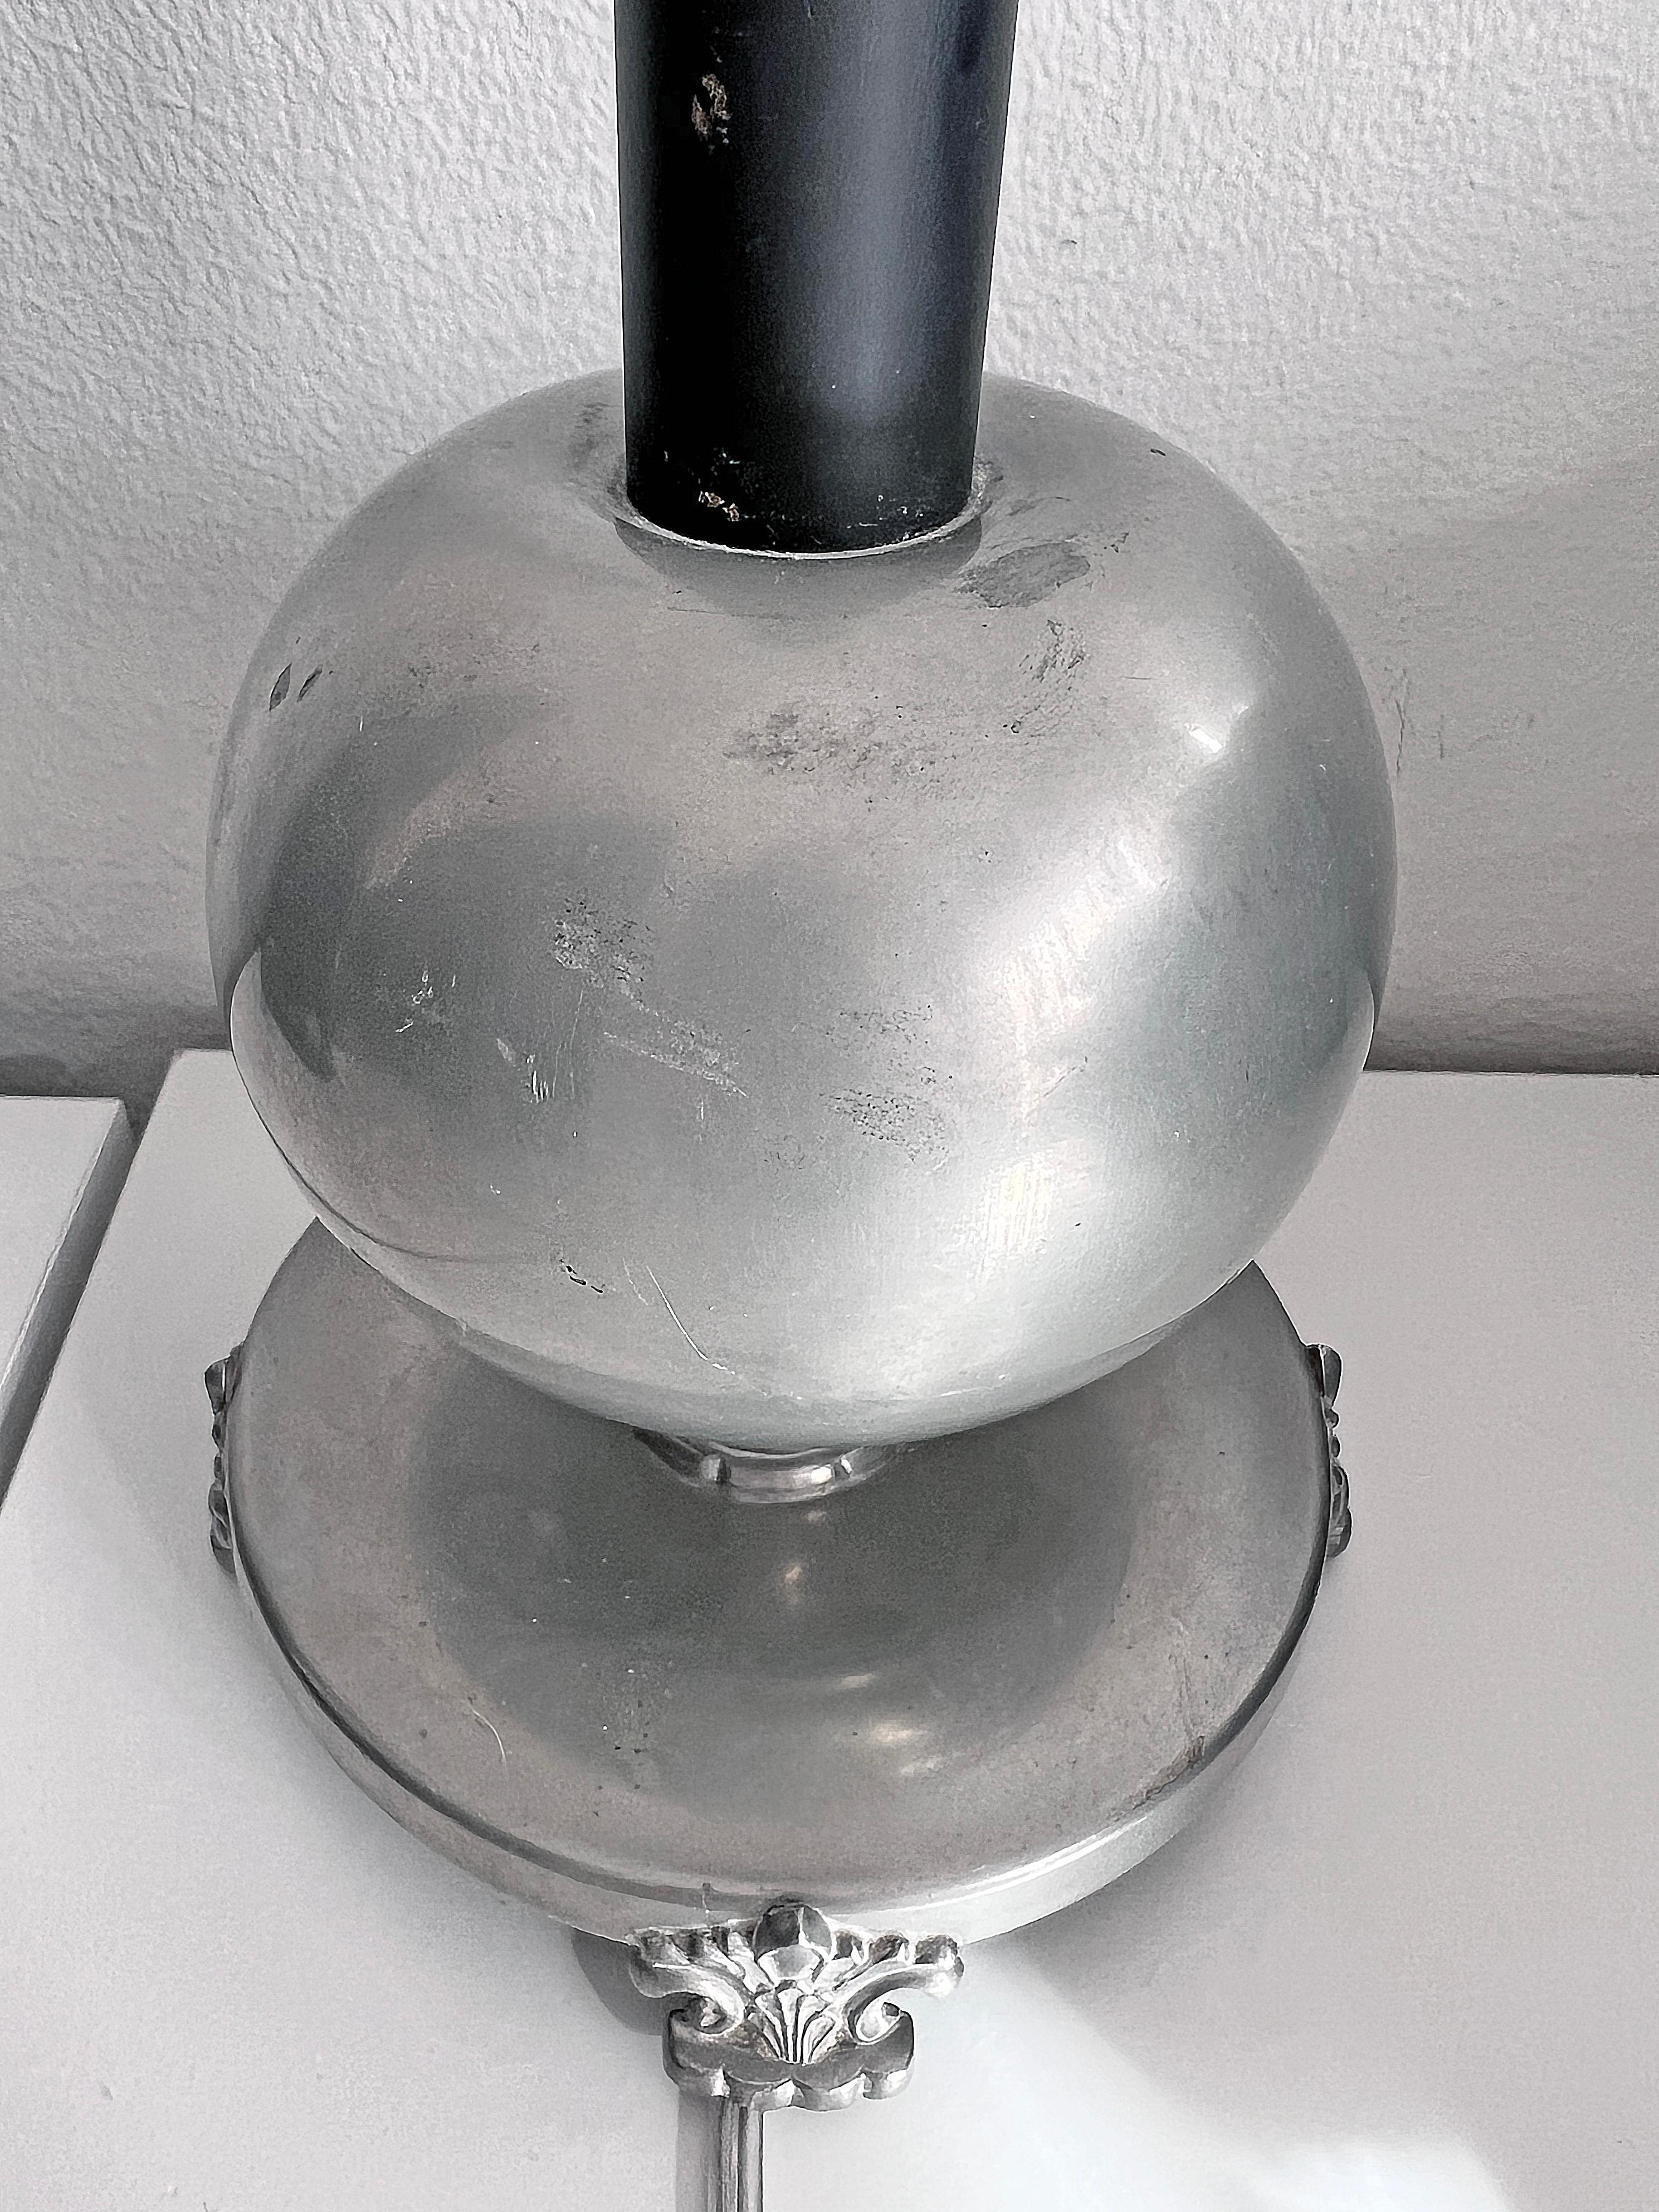 Scandinavian Modern Pewter Table Lamp, Nordiska Juvelaktiebolaget, Sweden 1935 For Sale 1